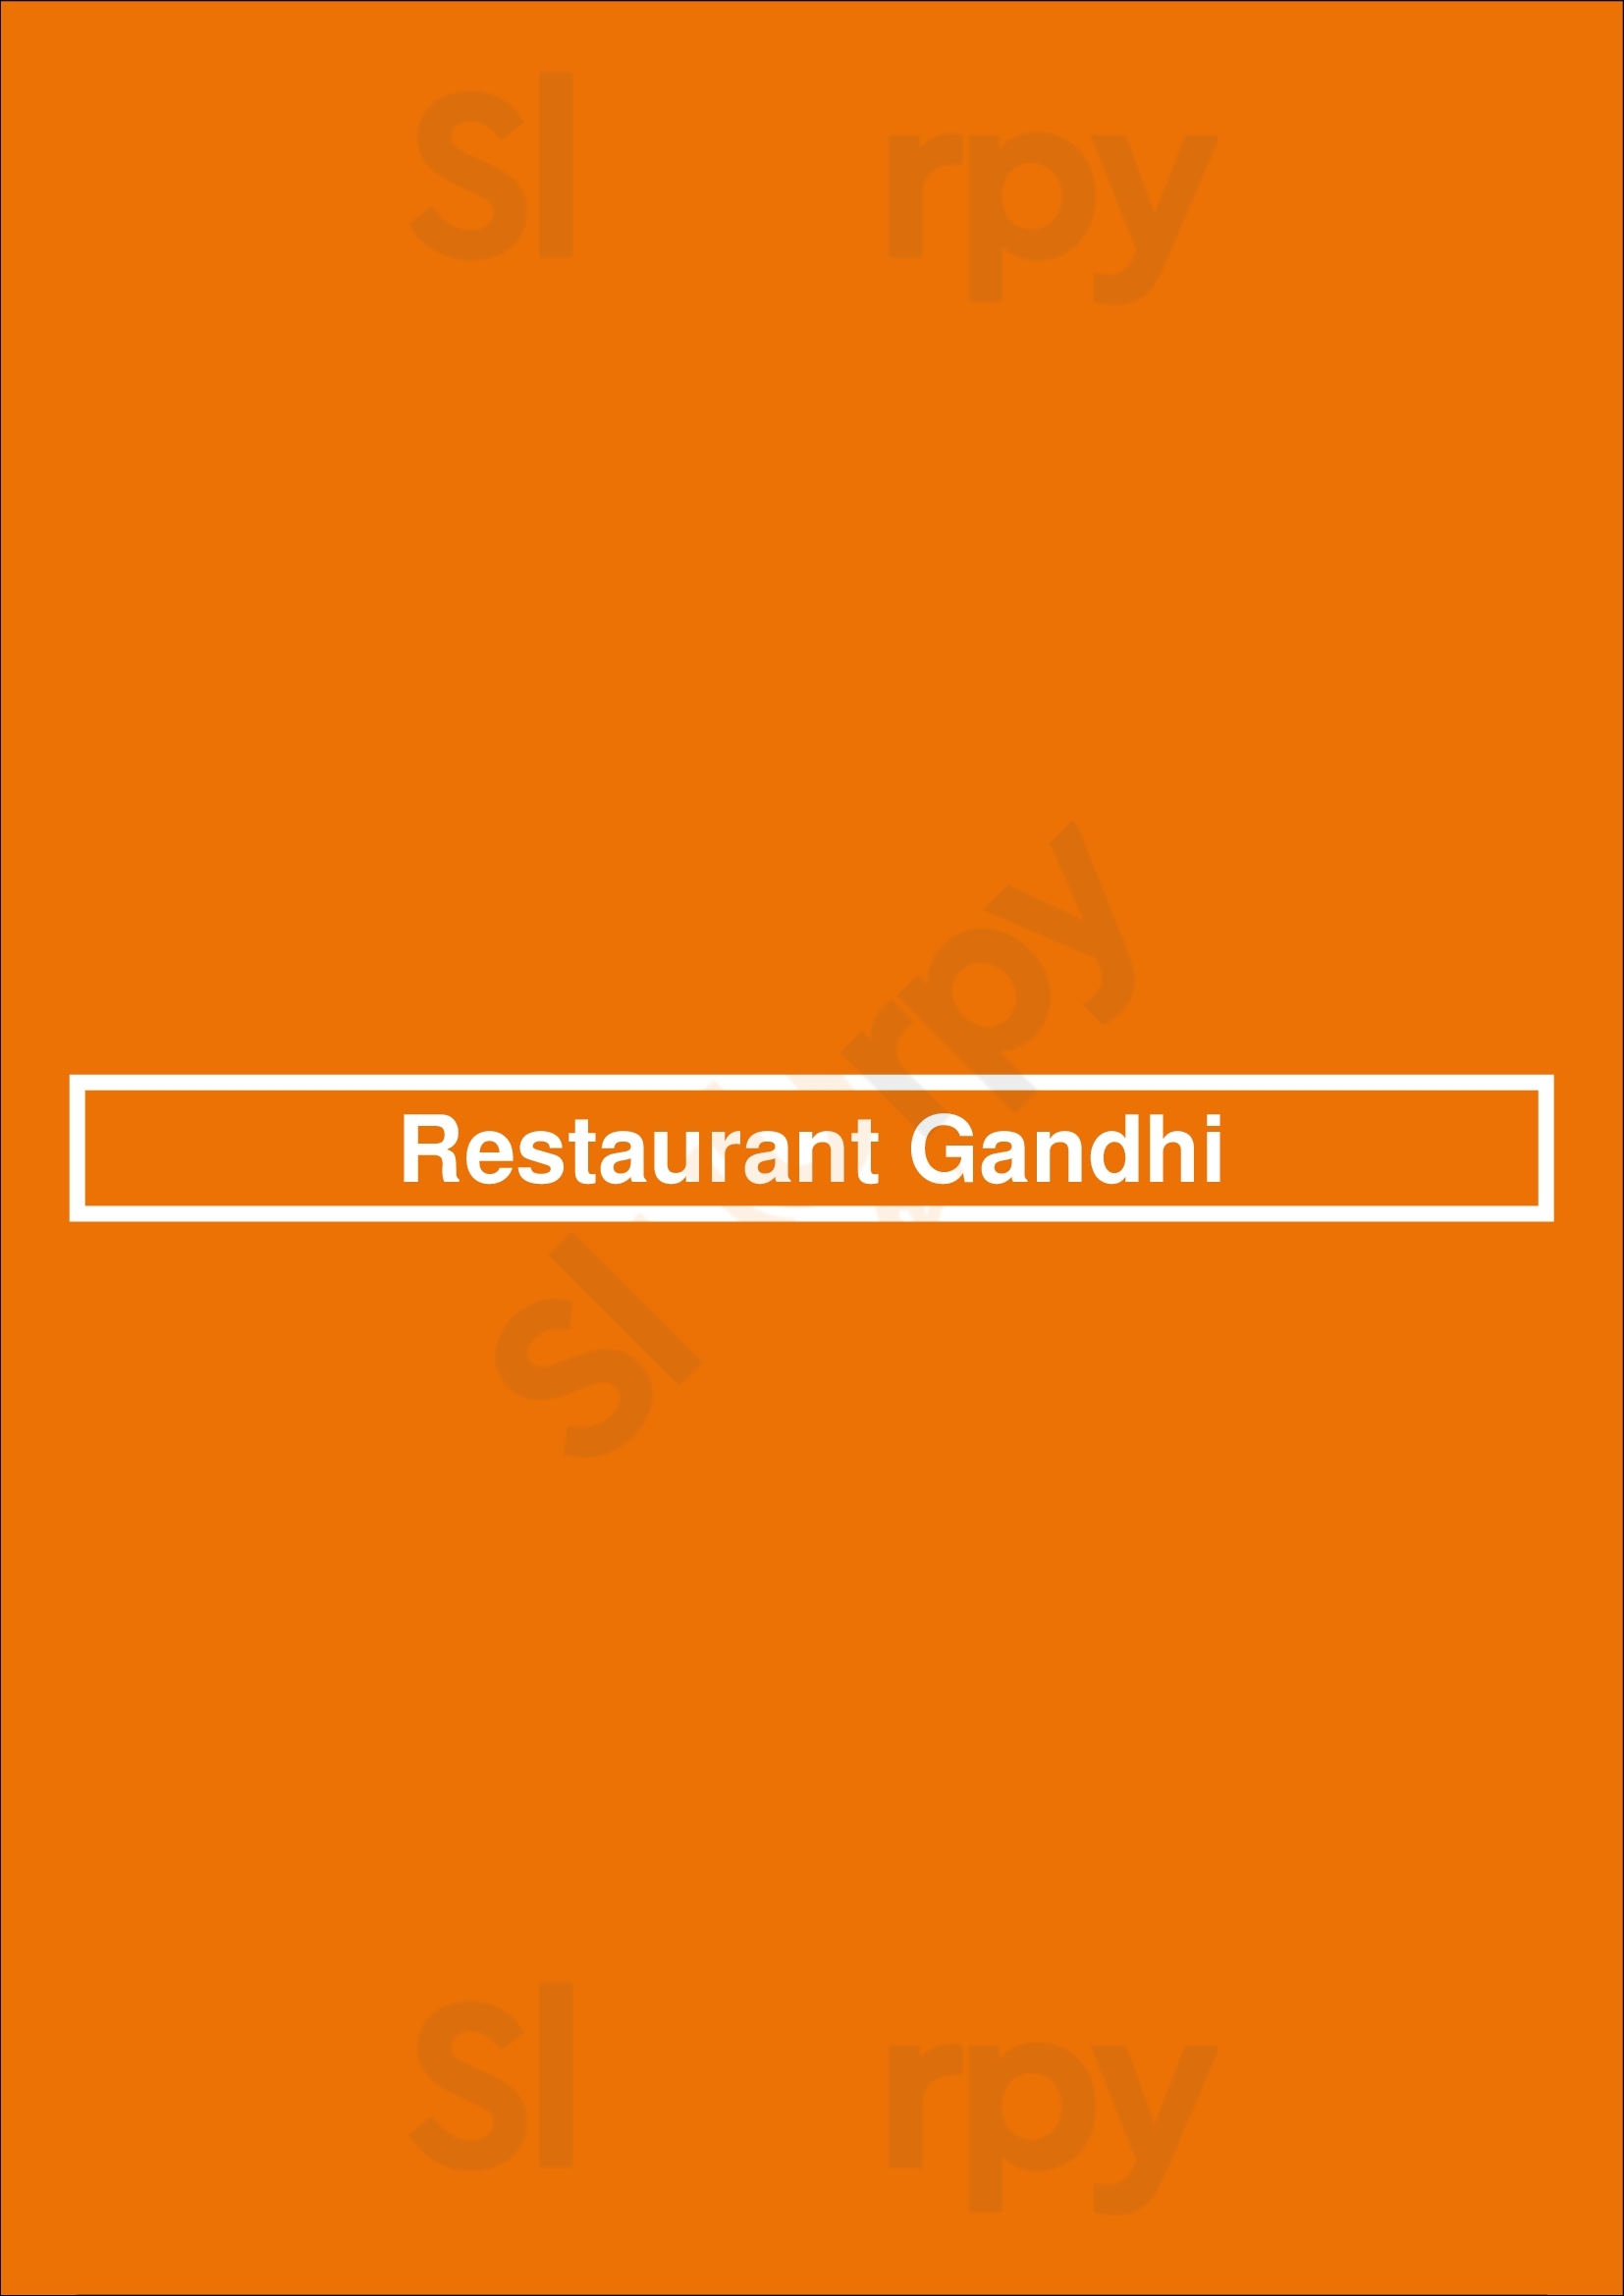 Restaurant Gandhi Utrecht Menu - 1